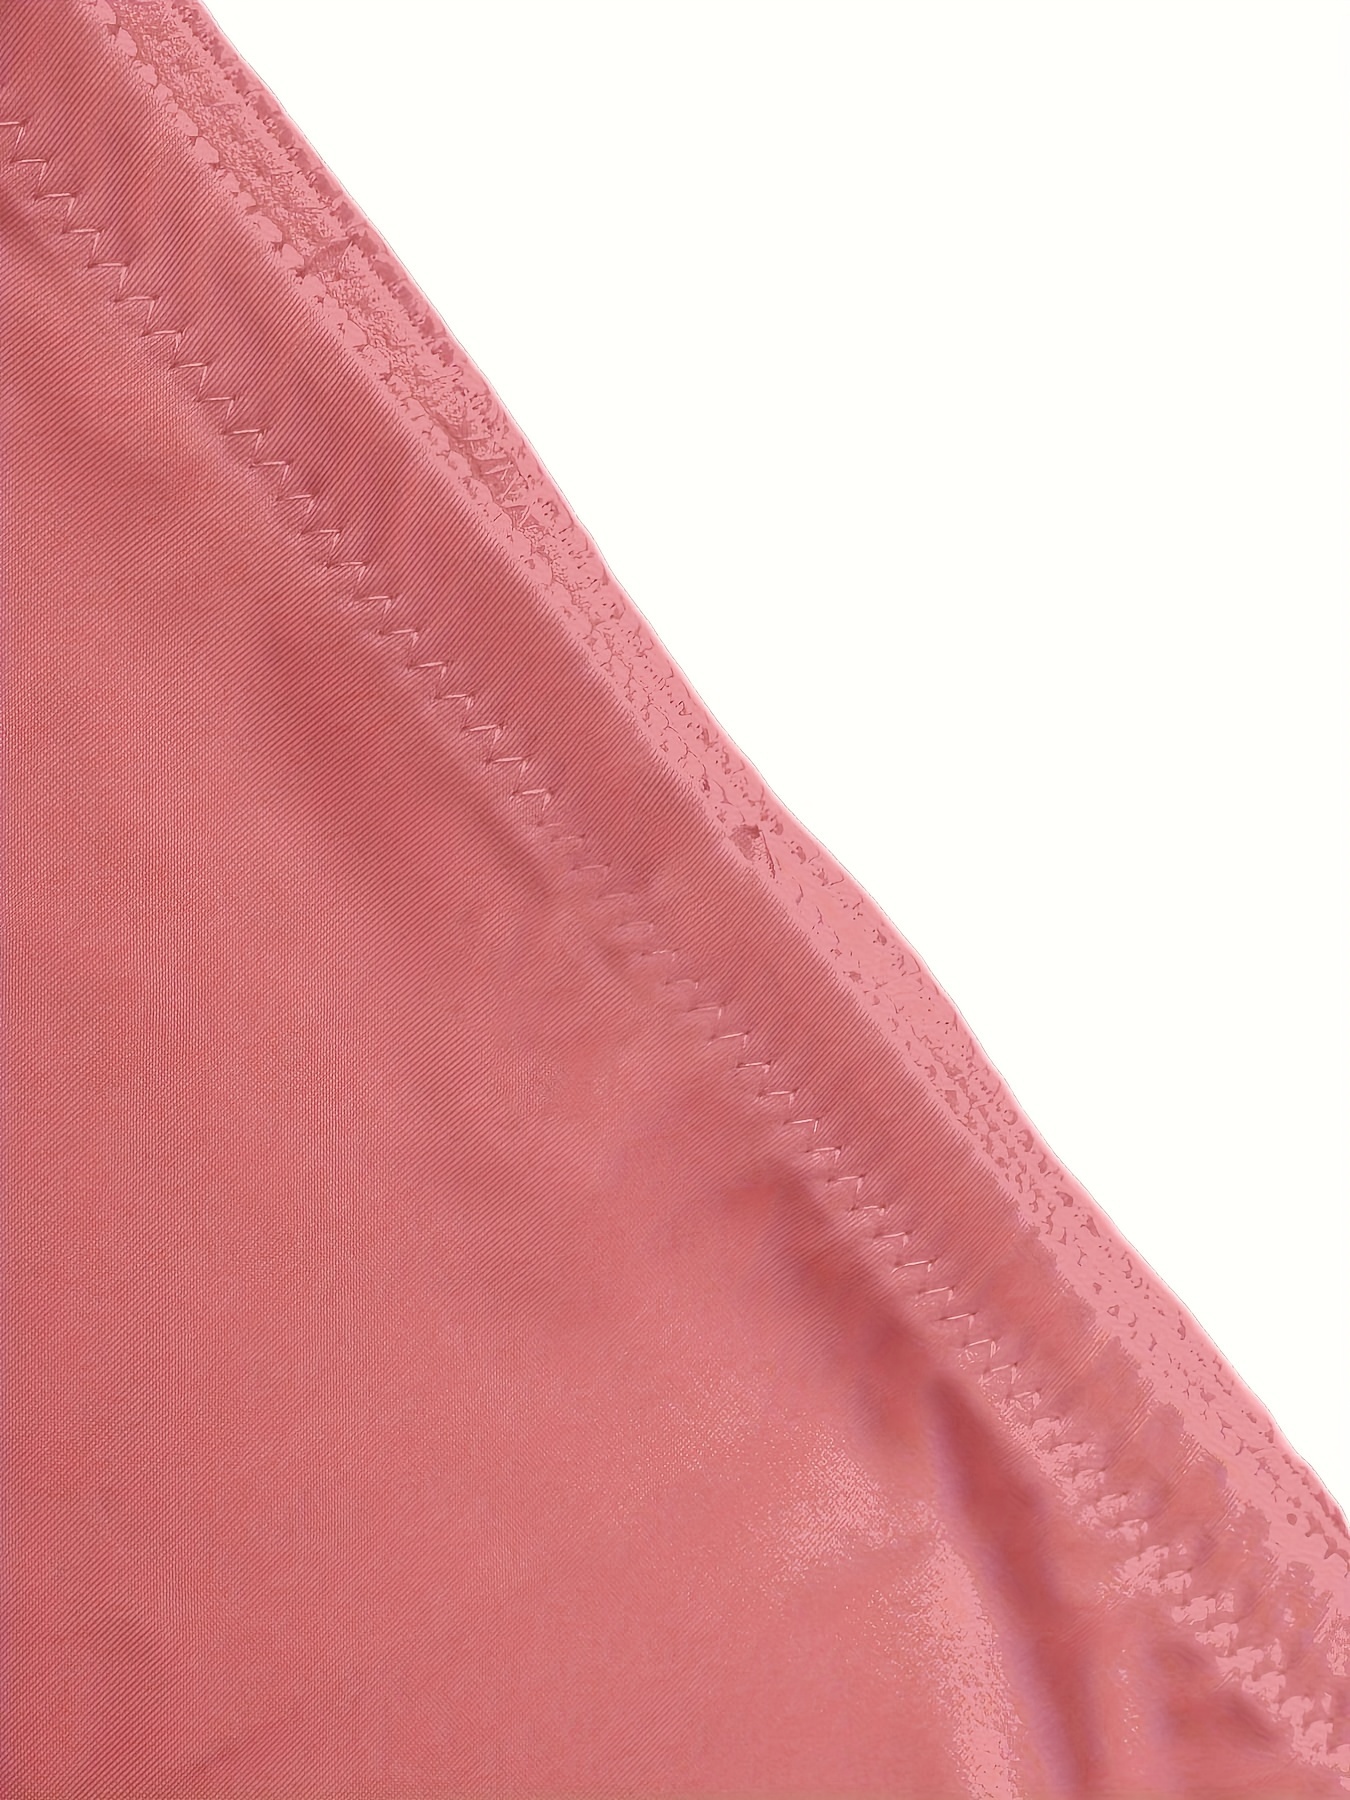 Buy SUPRMODL Seamless Underwear Women Stretch high Waist, Full